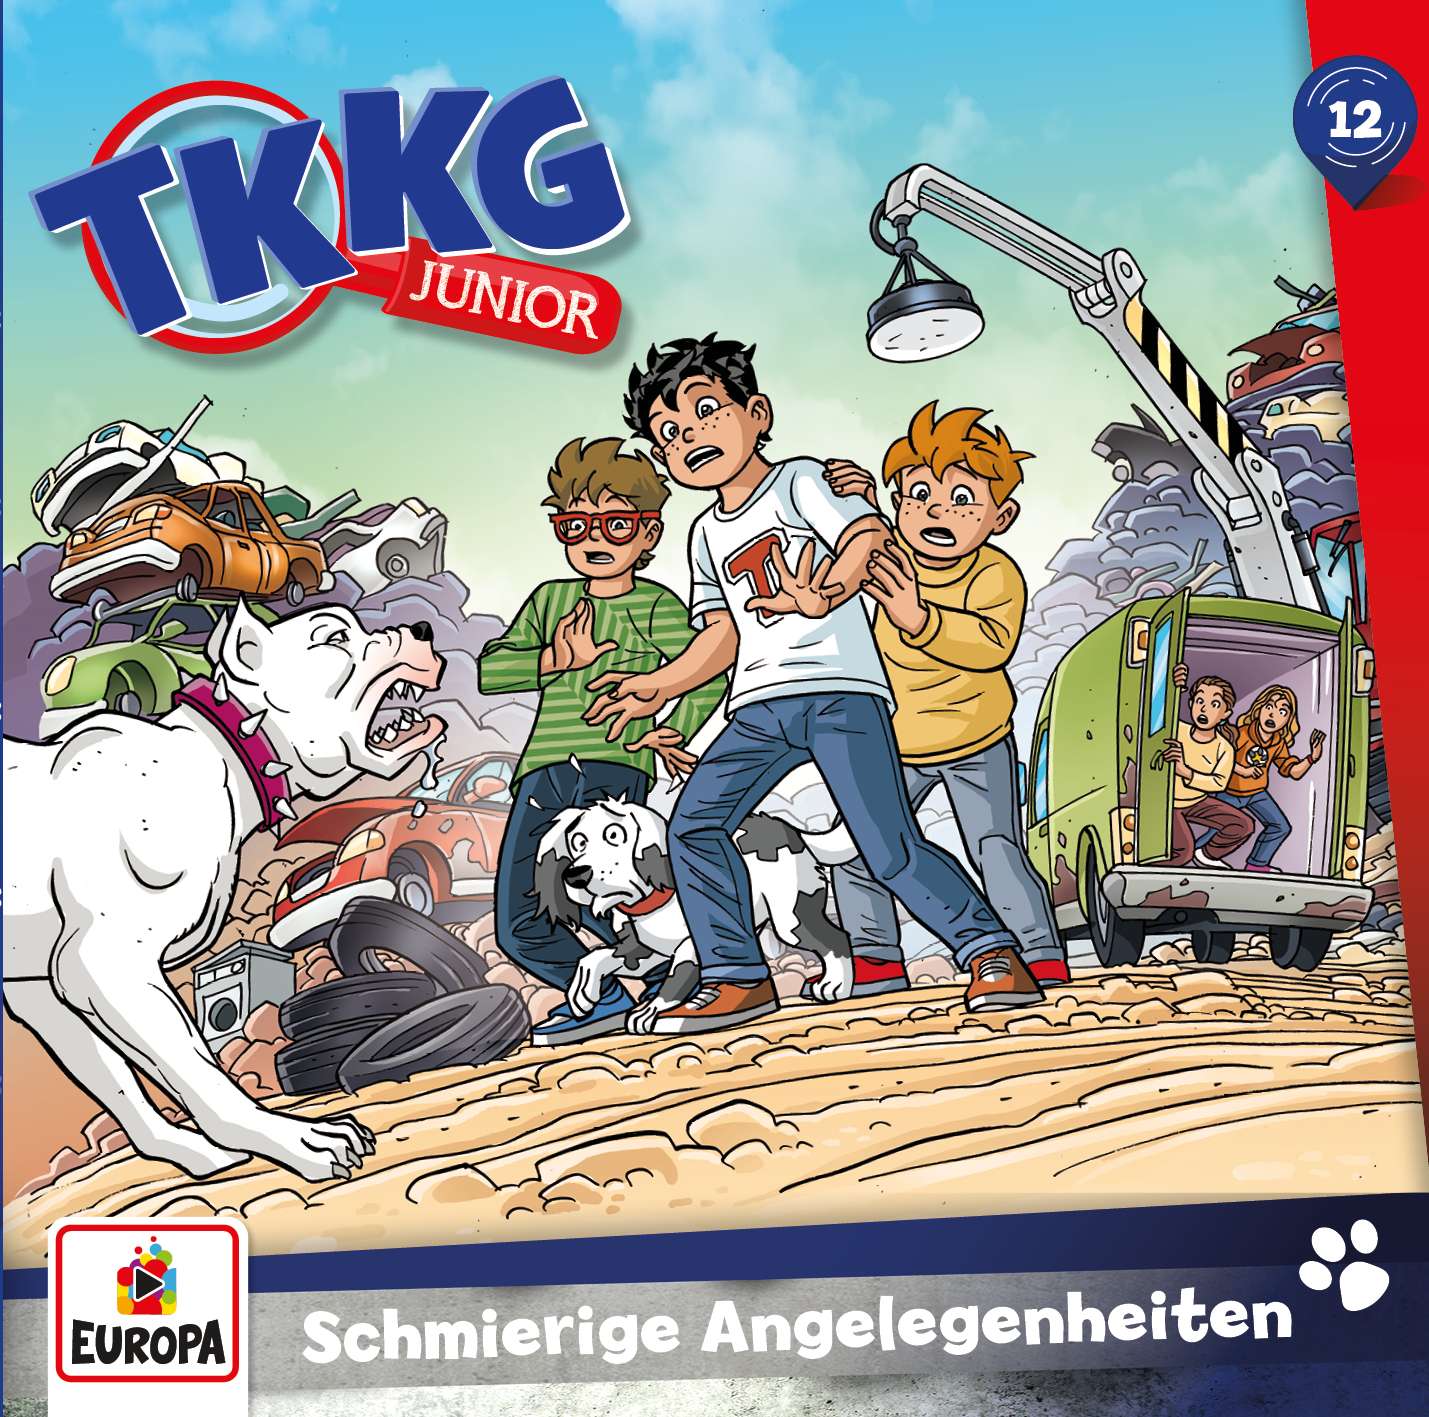 TKKG Junior: Schmierige Angelegenheiten